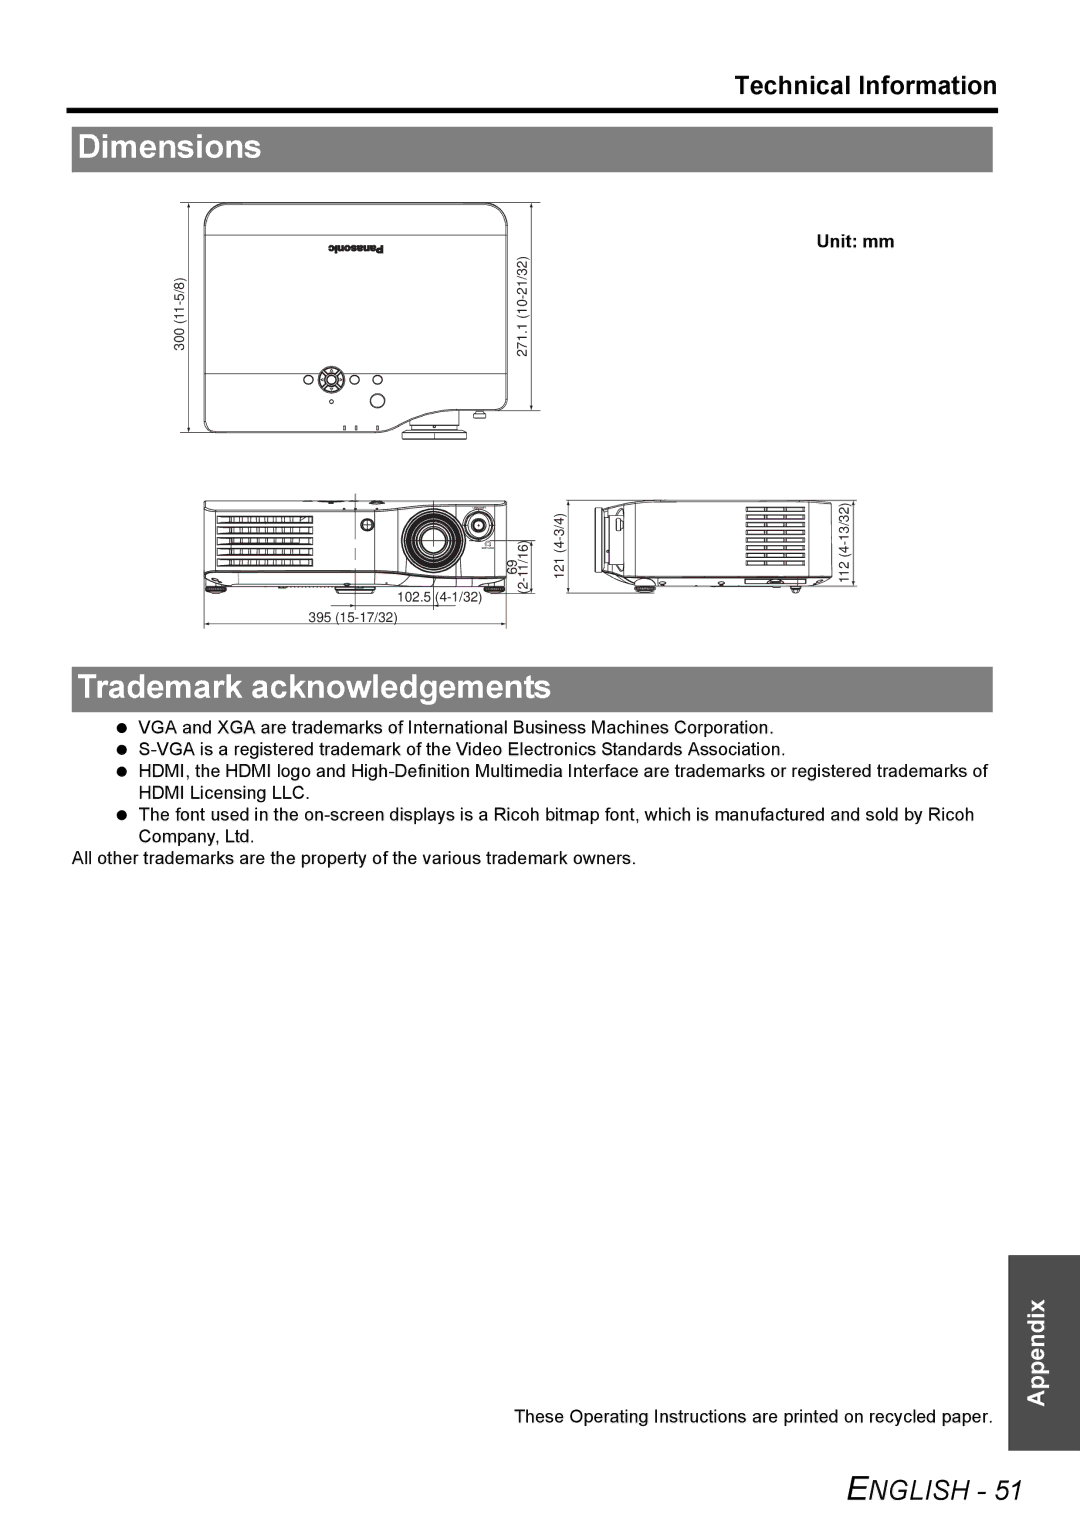 Panasonic PT-AX200U manual Dimensions, Trademark acknowledgements, Unit mm 